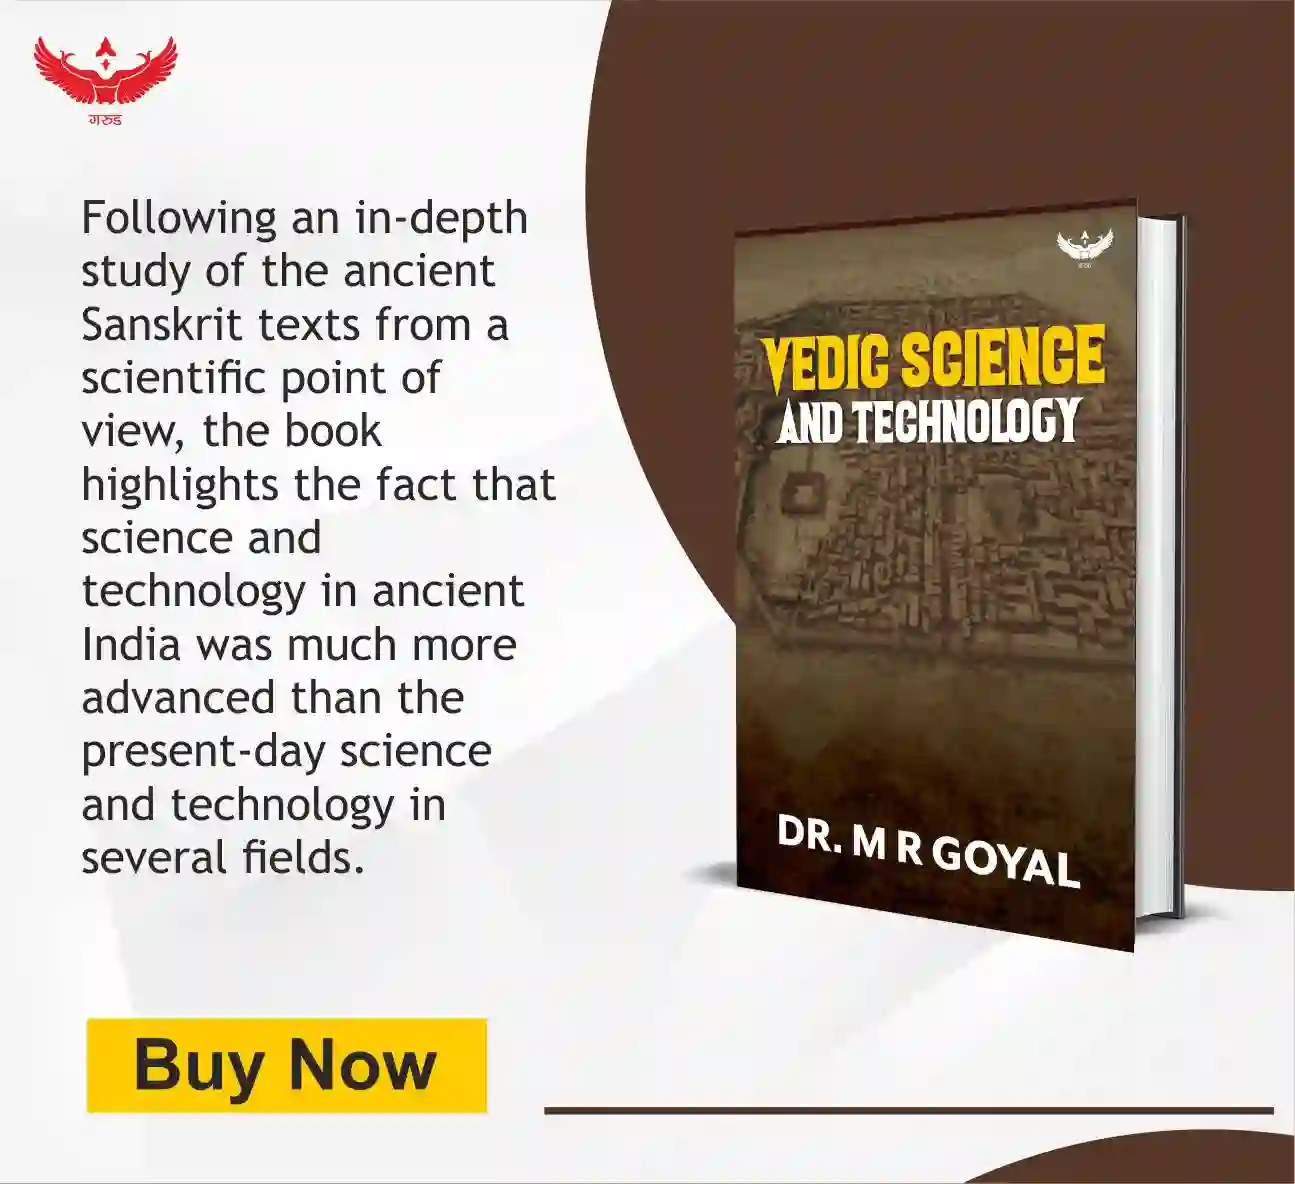 https://garudabooks.com/vedic-science-and-technology-